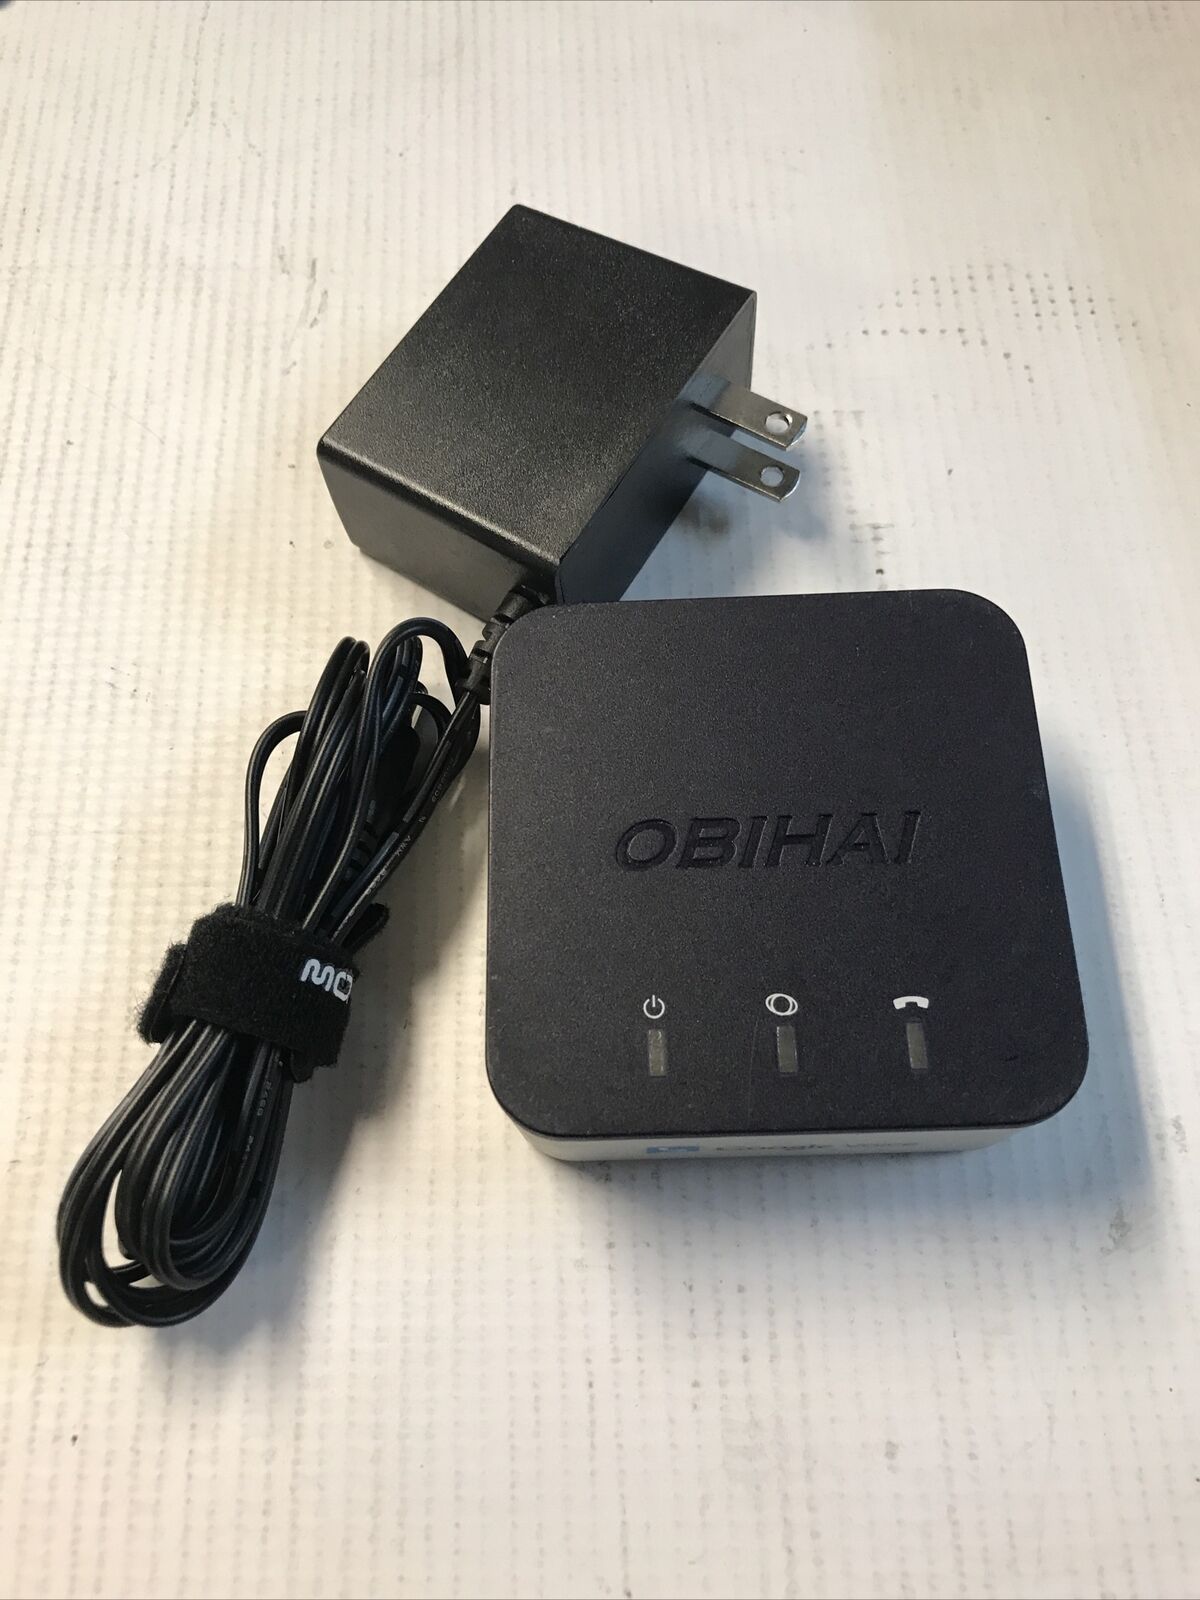 Obihai OBI200 1-Port VoIP Phone Adapter with Google Voice